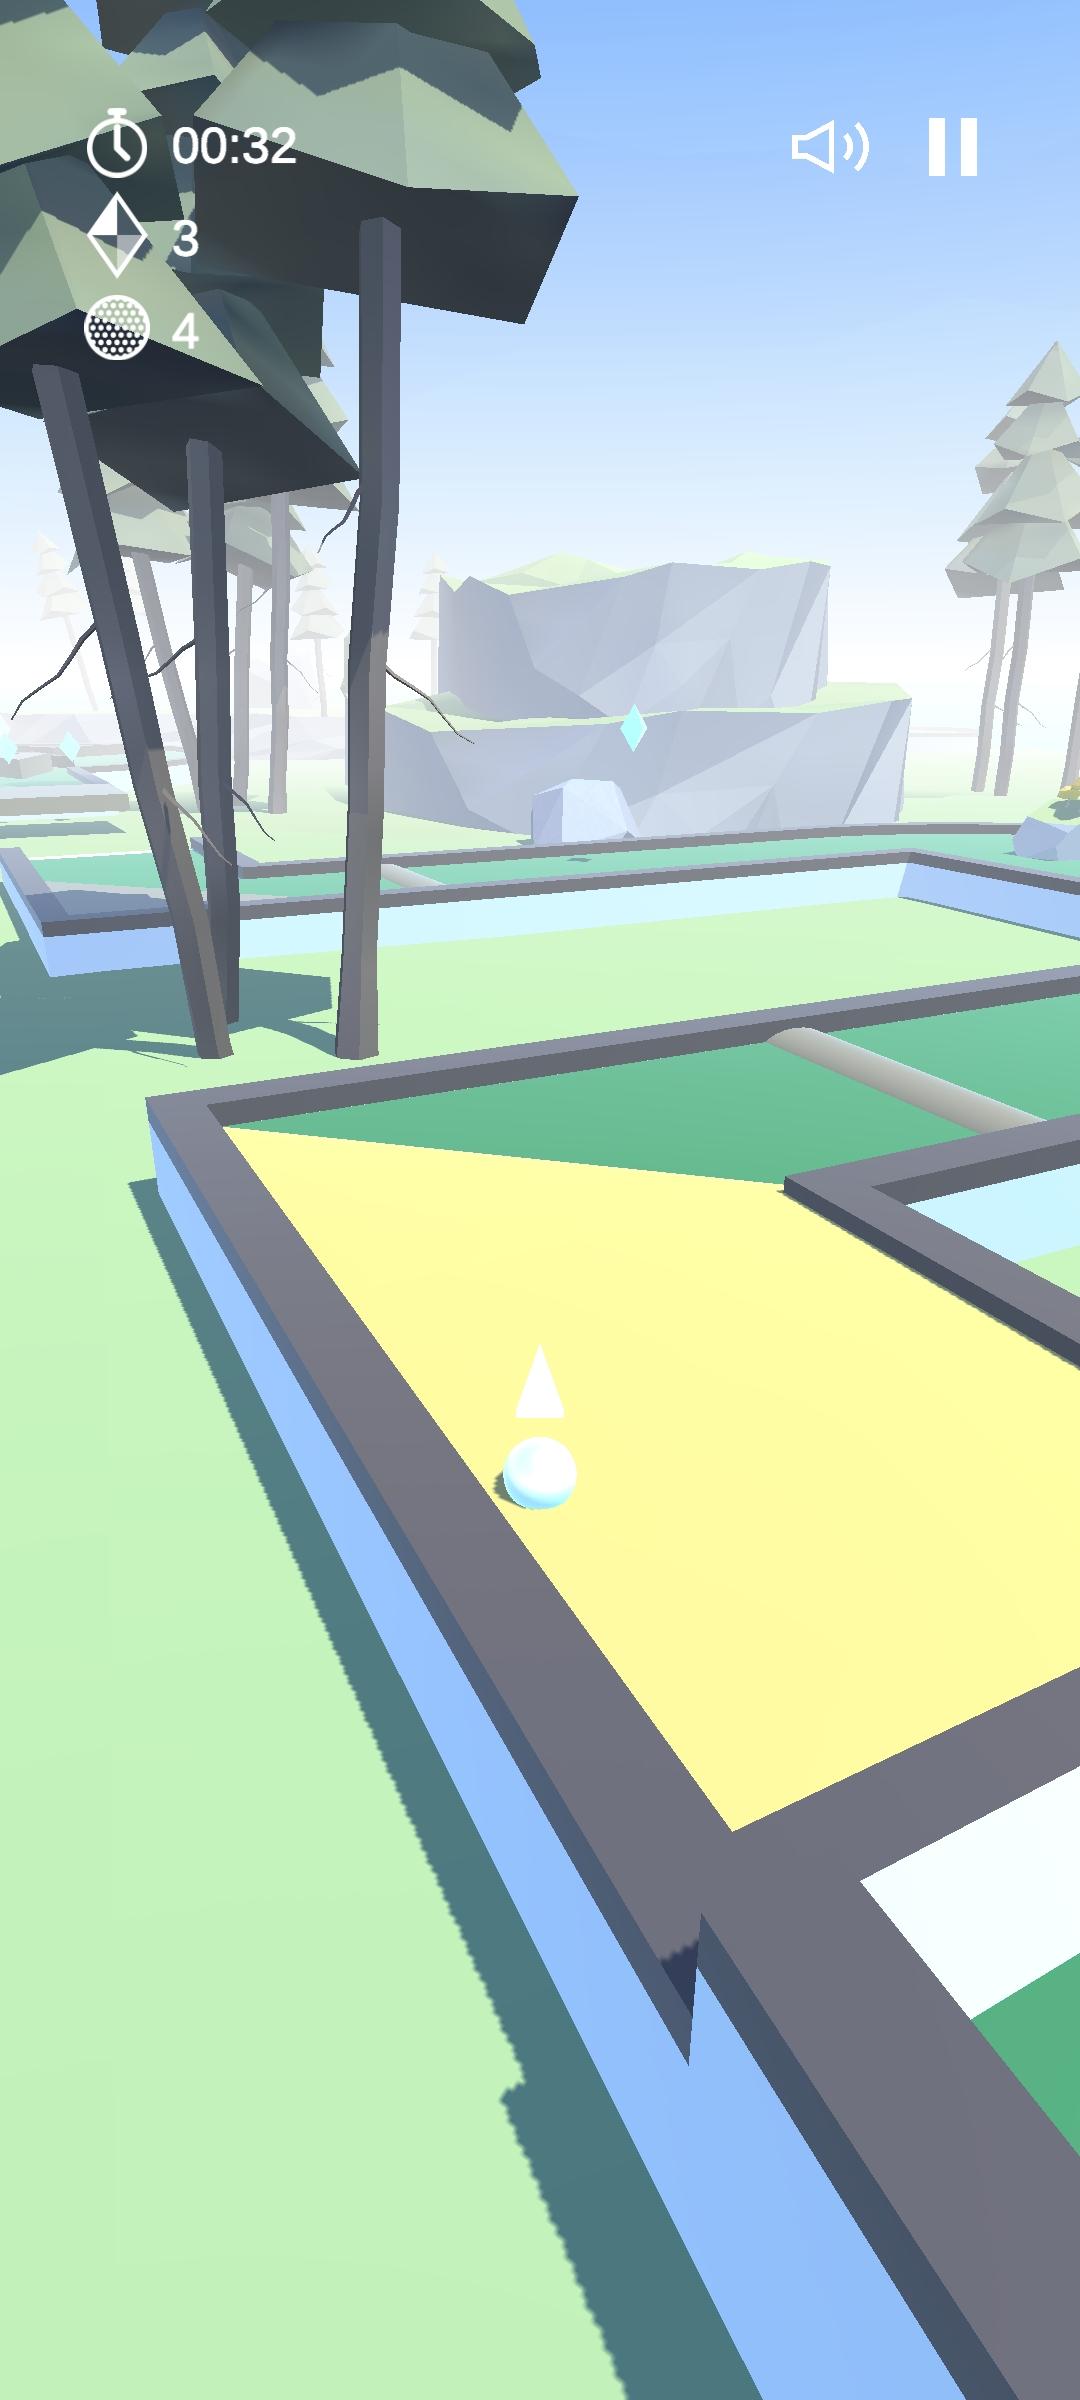 Mini Golf Adventure 2.11 Screenshot 18